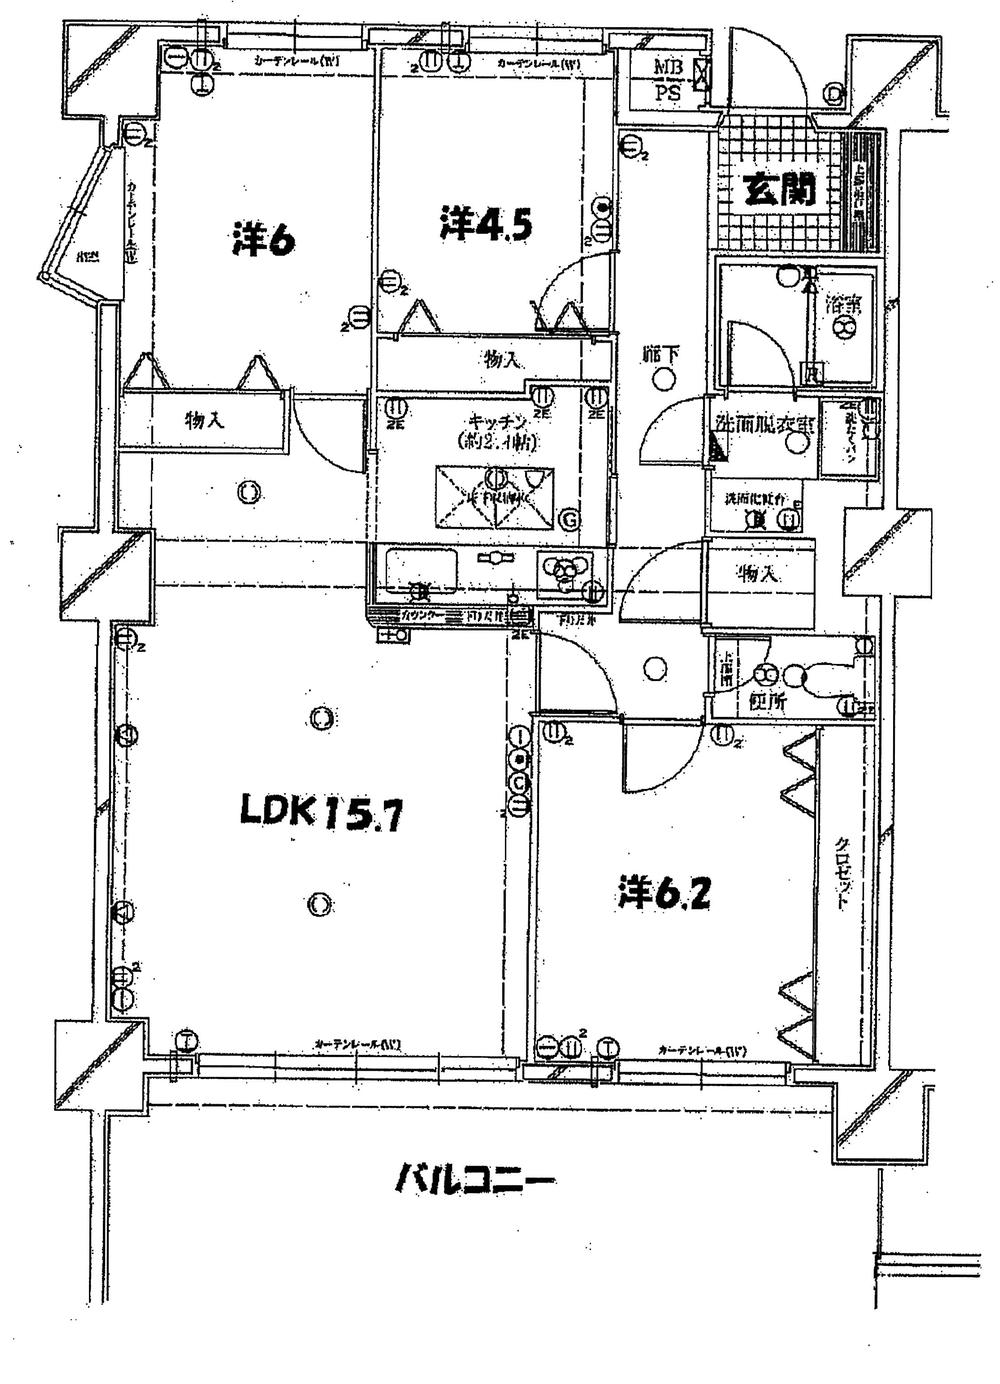 Floor plan. 3LDK, Price 15.8 million yen, Occupied area 82.57 sq m , Balcony area 15.2 sq m